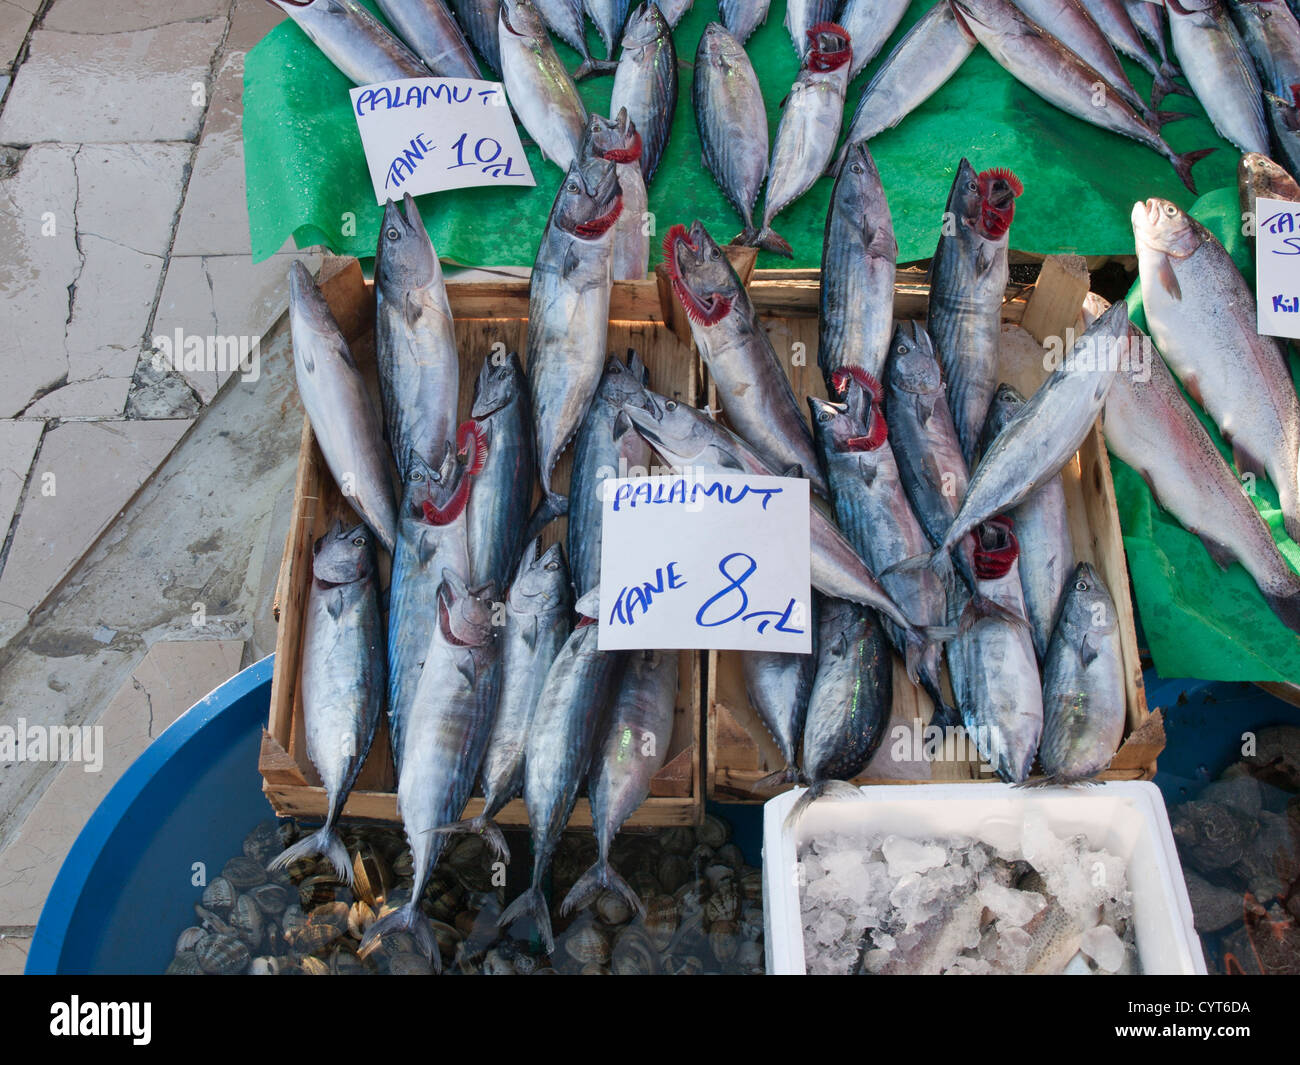 Morning fish market in Kumkapi Istanbul Turkey, fish fresh straight off the boats, here small palamut firsh, Atlantic bonito Stock Photo